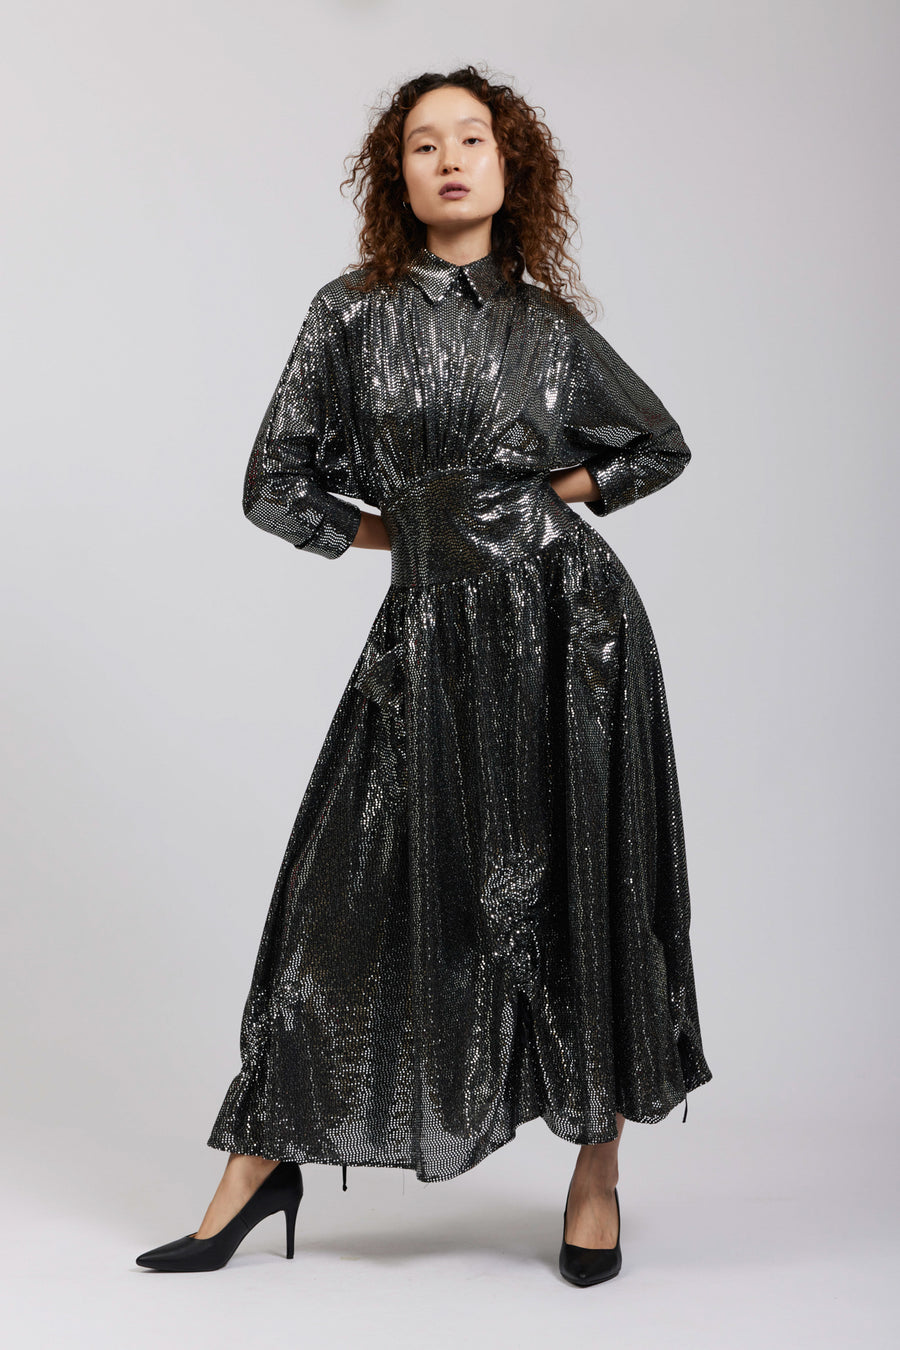 BATSHEVA - Goldie Dress in Silver Sequin